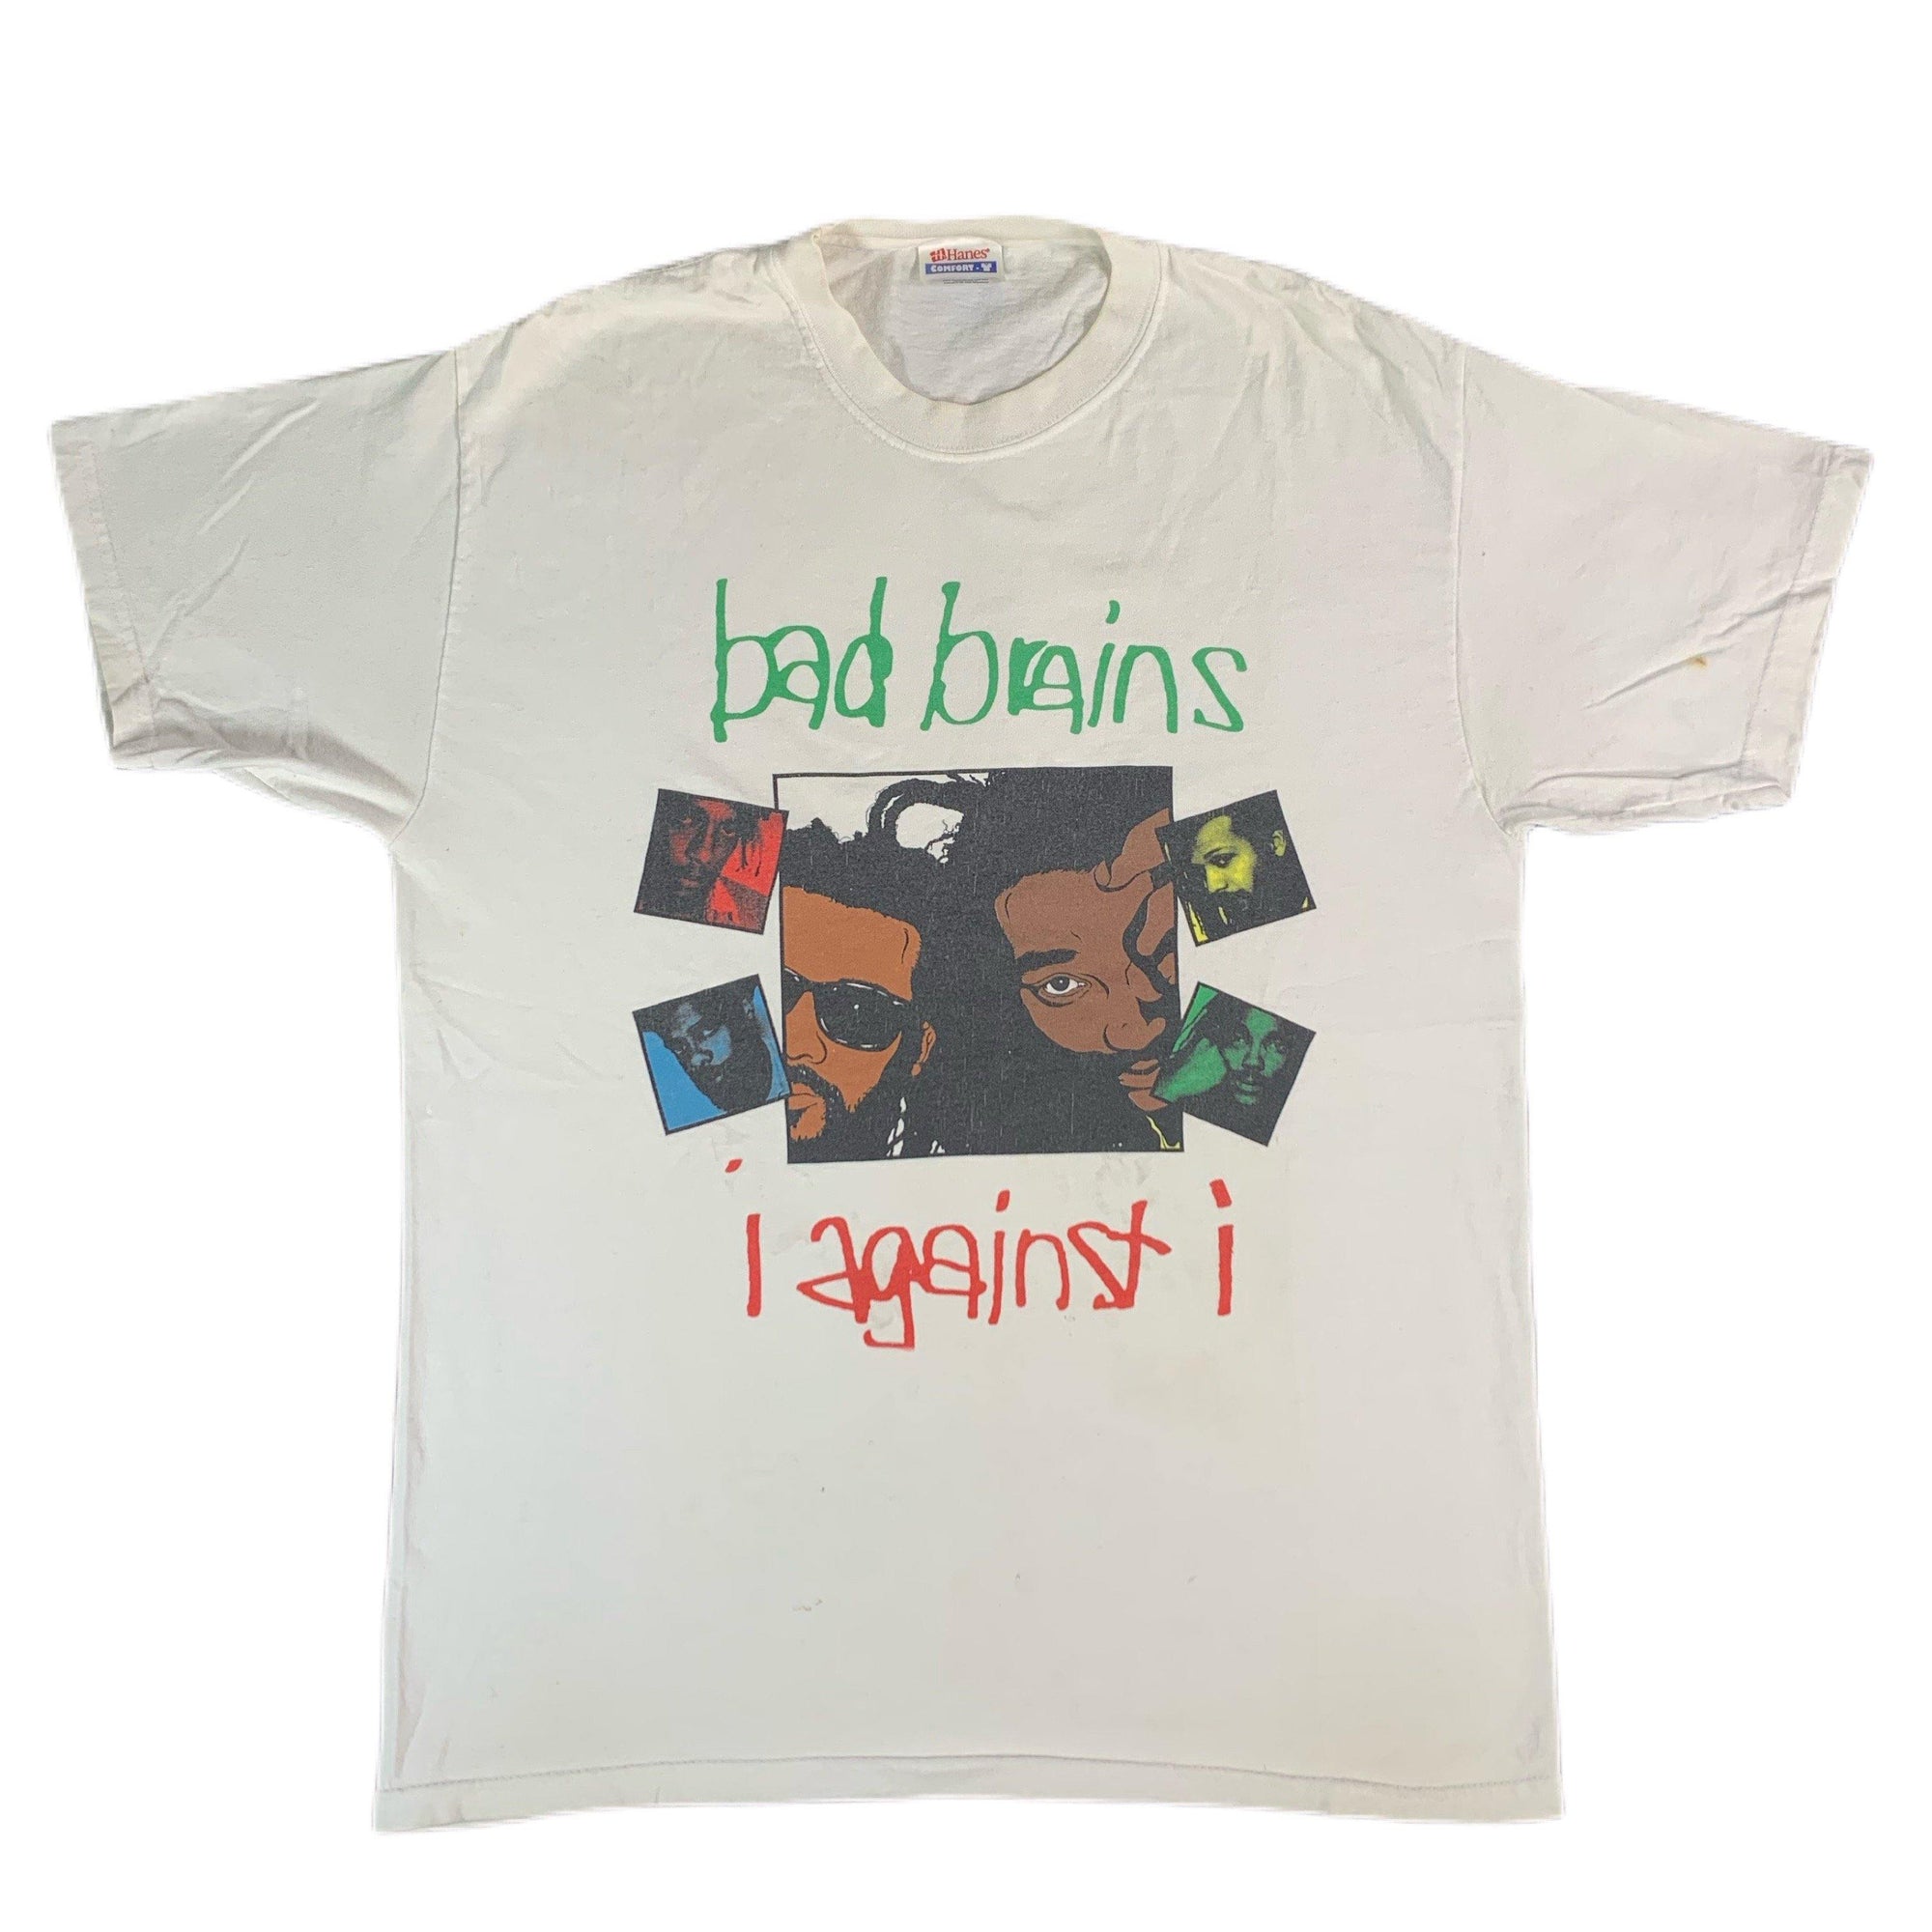 Vintage Bad Brains "I Against I" T-Shirt - jointcustodydc